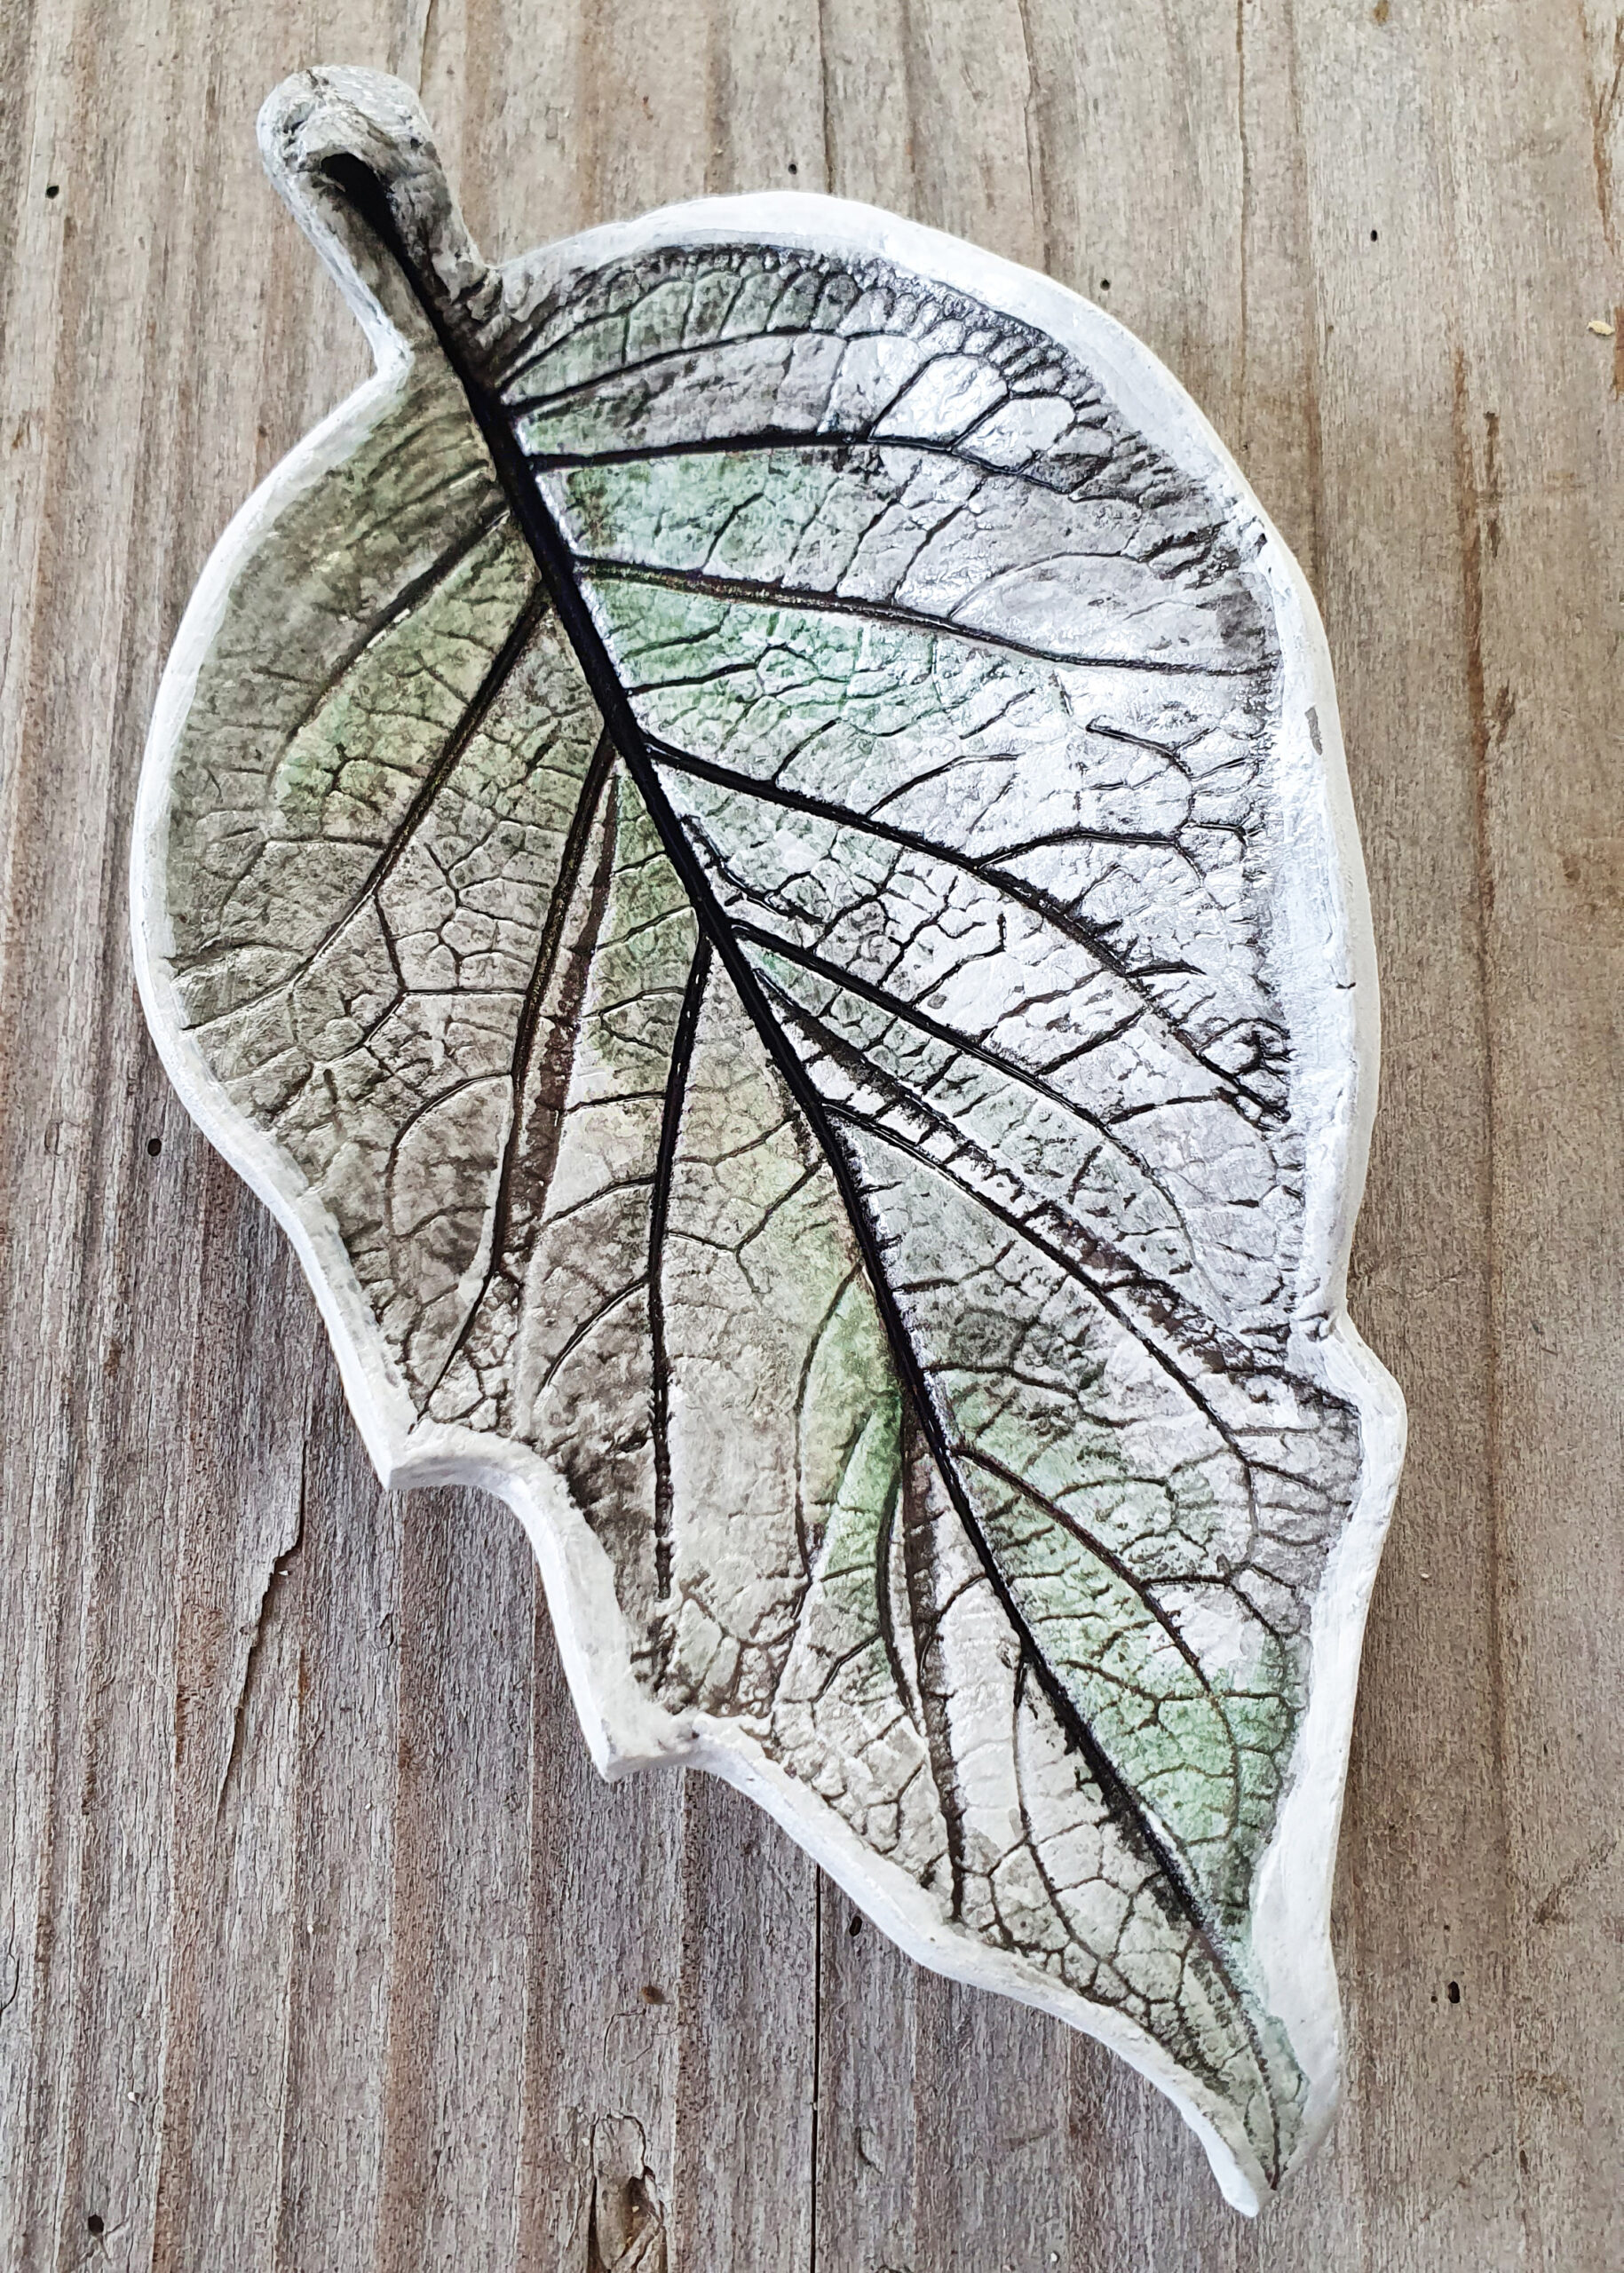 clay leaf made of Brugmansia, angels trumpet